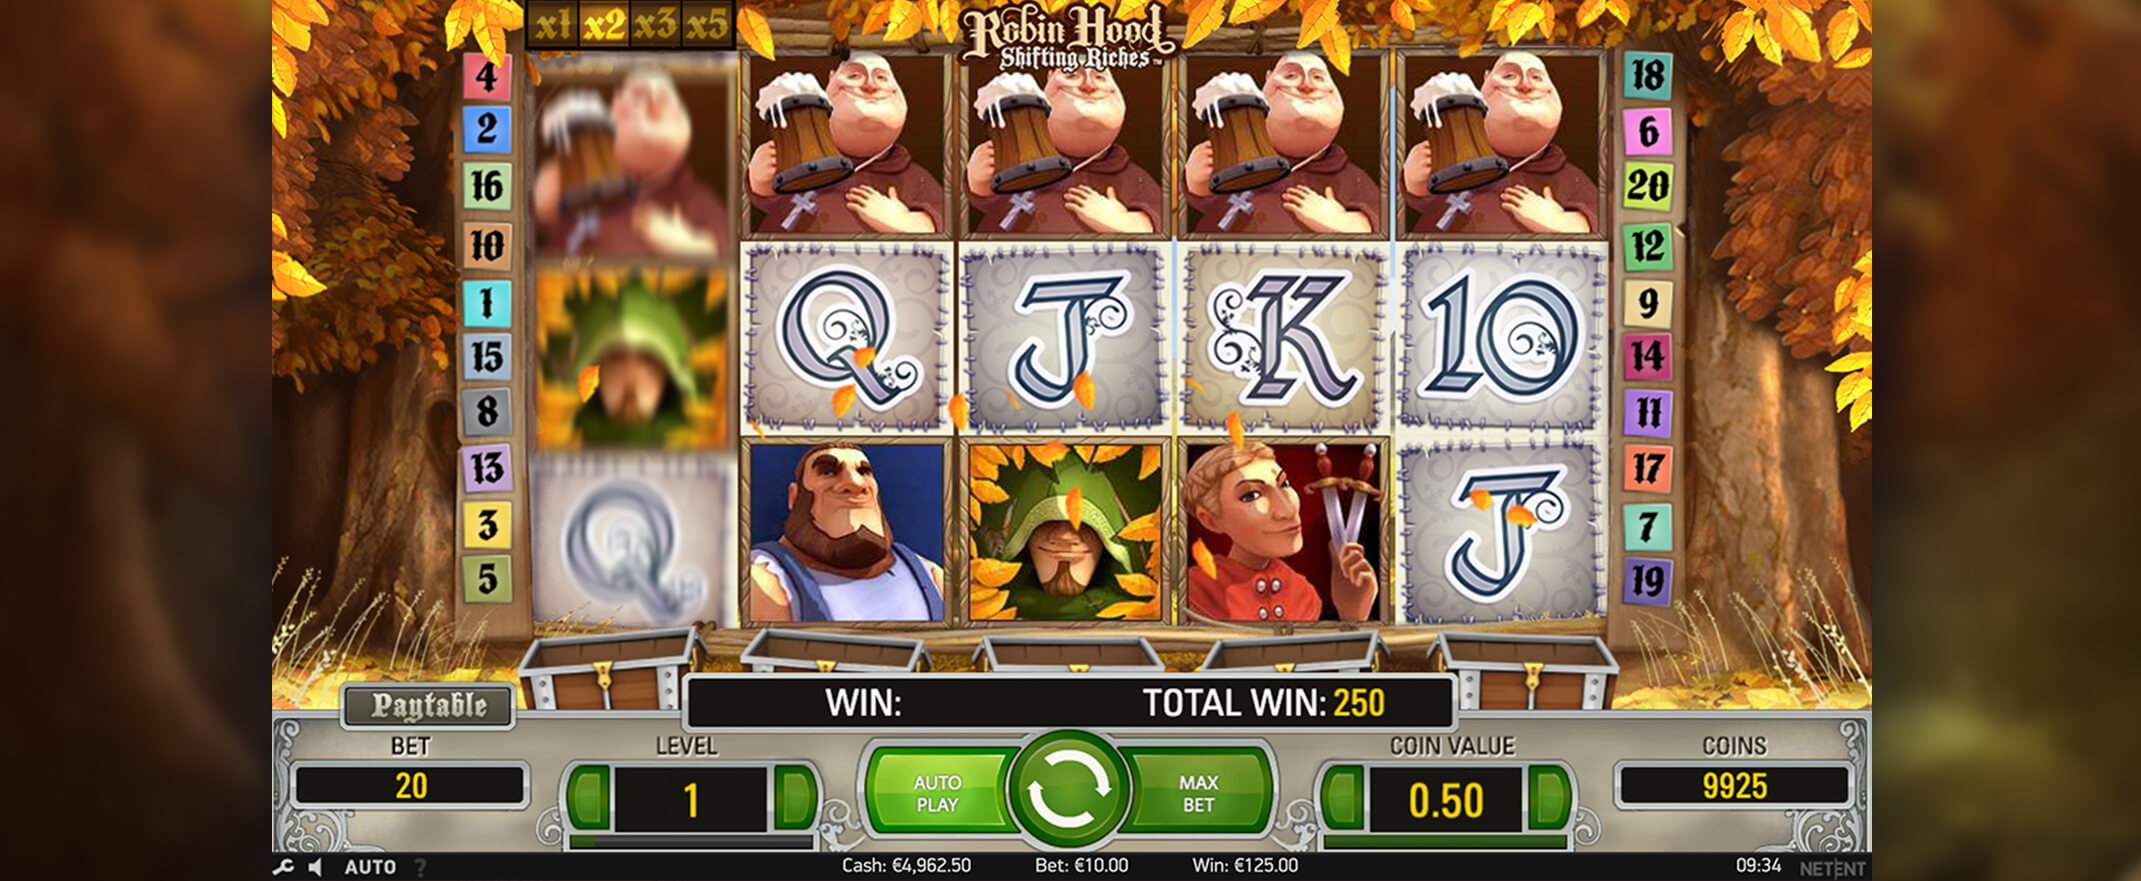 Robin Hood Slot Screenshot